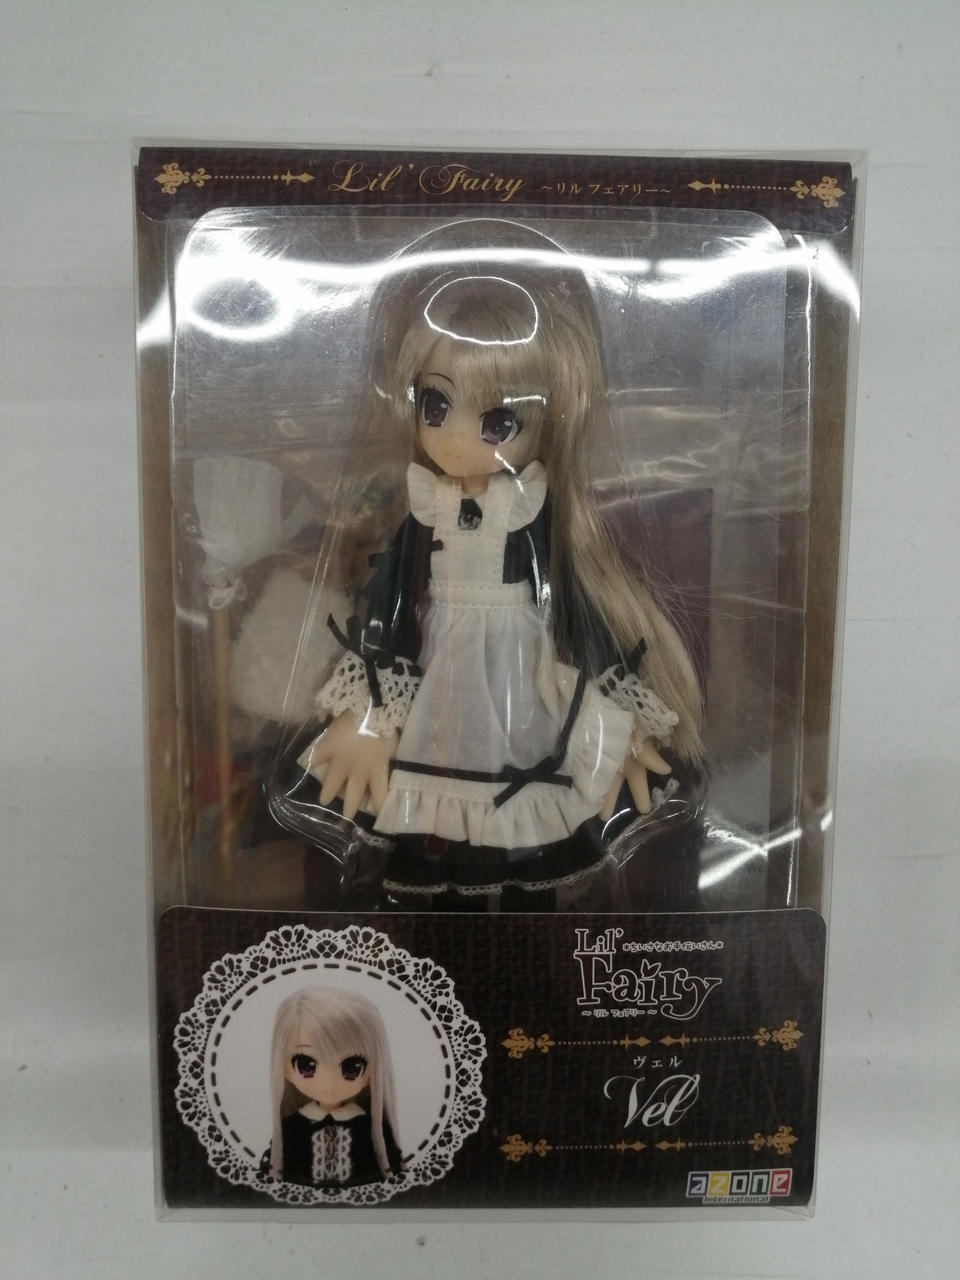 Azone Lil' Fairy Vel 1/12 Scale Doll - Rare Collectible Figure